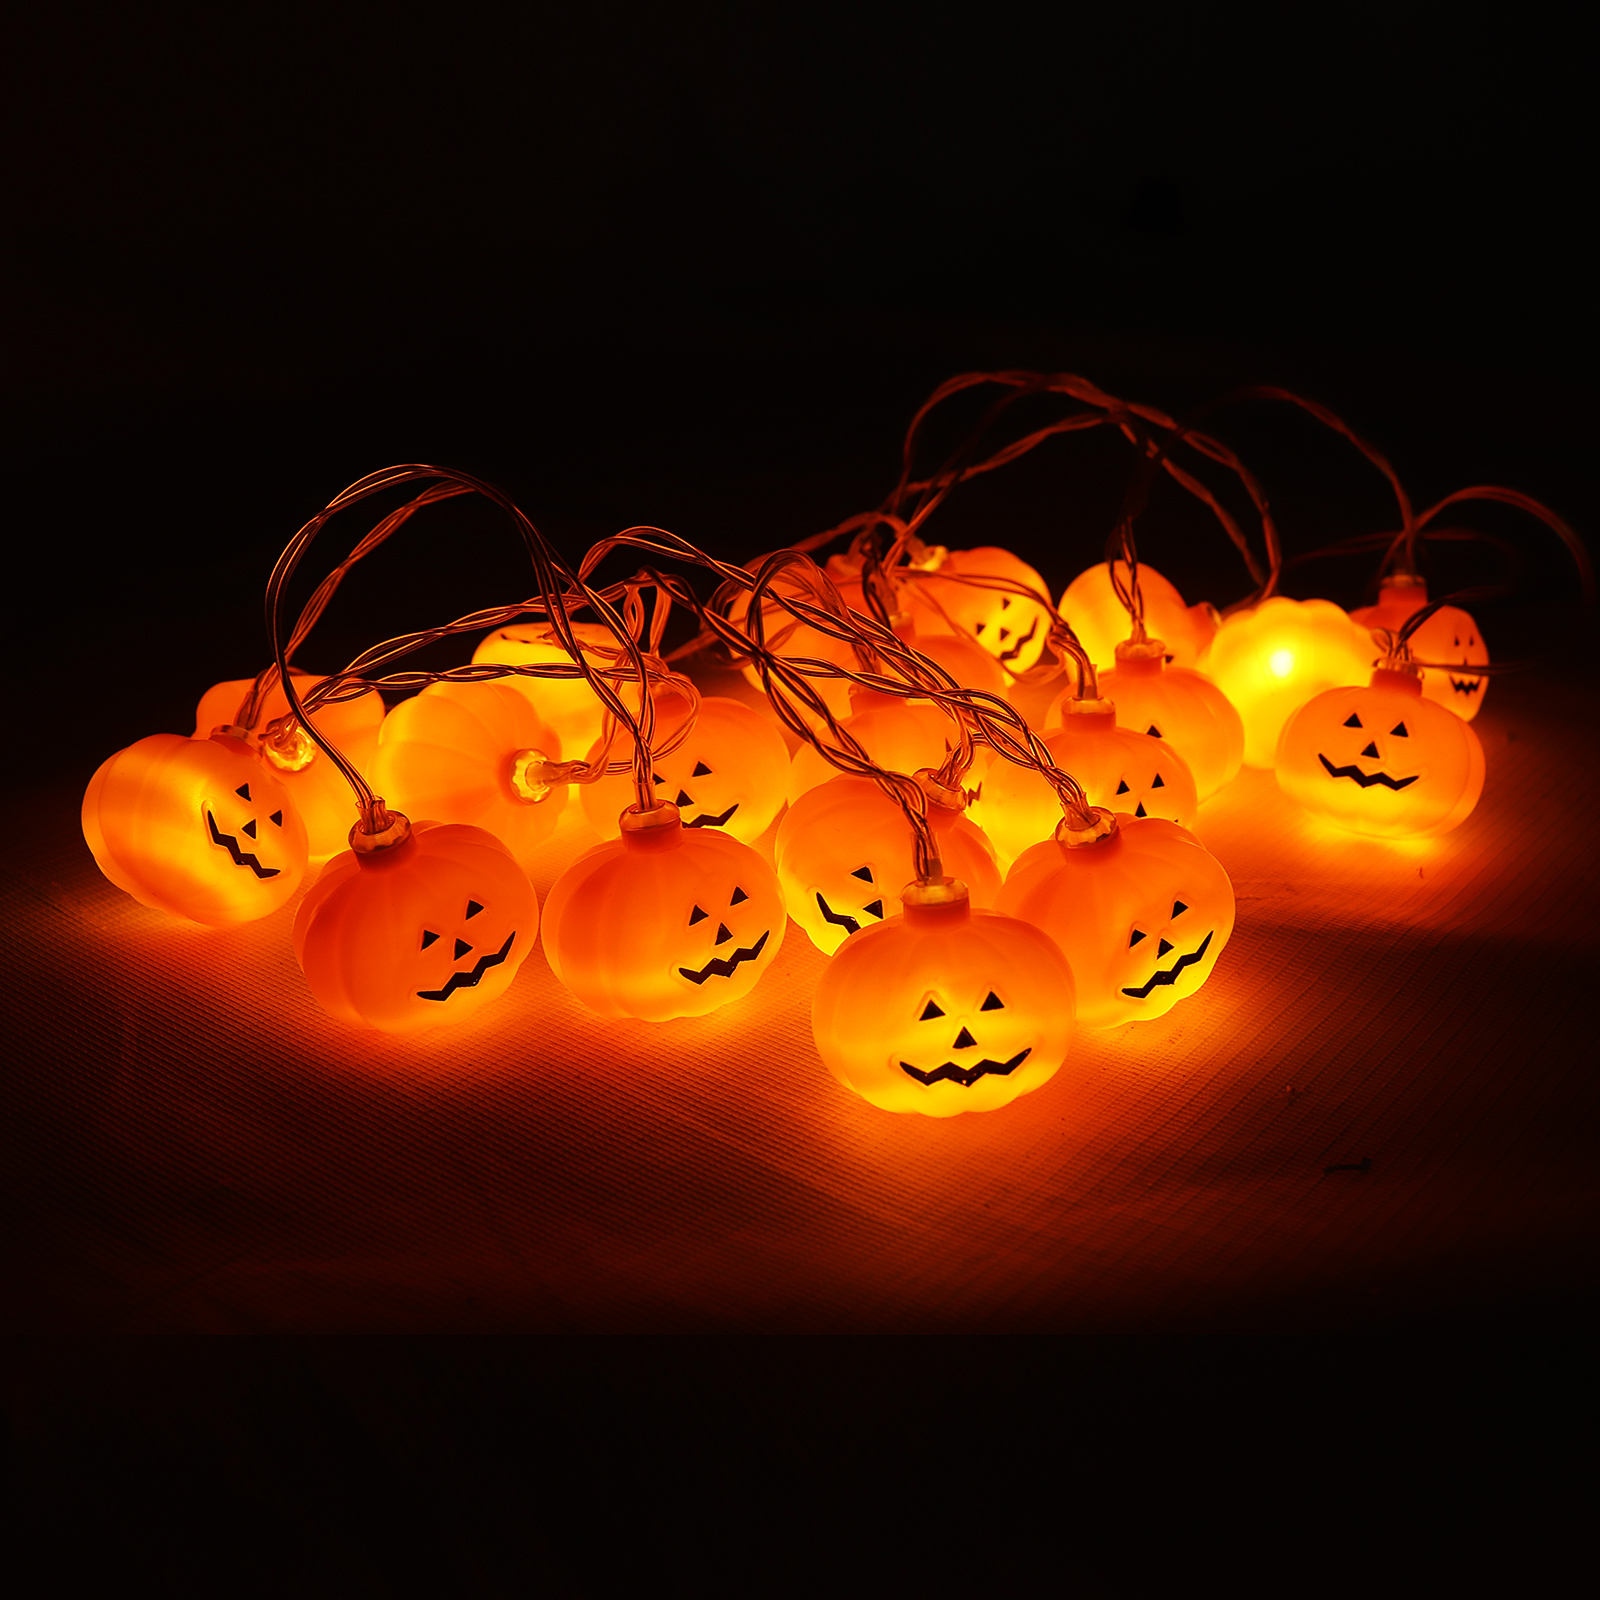 98ft-Halloween-Decorations-20-LED-Pumpkin-String-Lights-Home-Garden-Decor-Warm-White-1890365-7